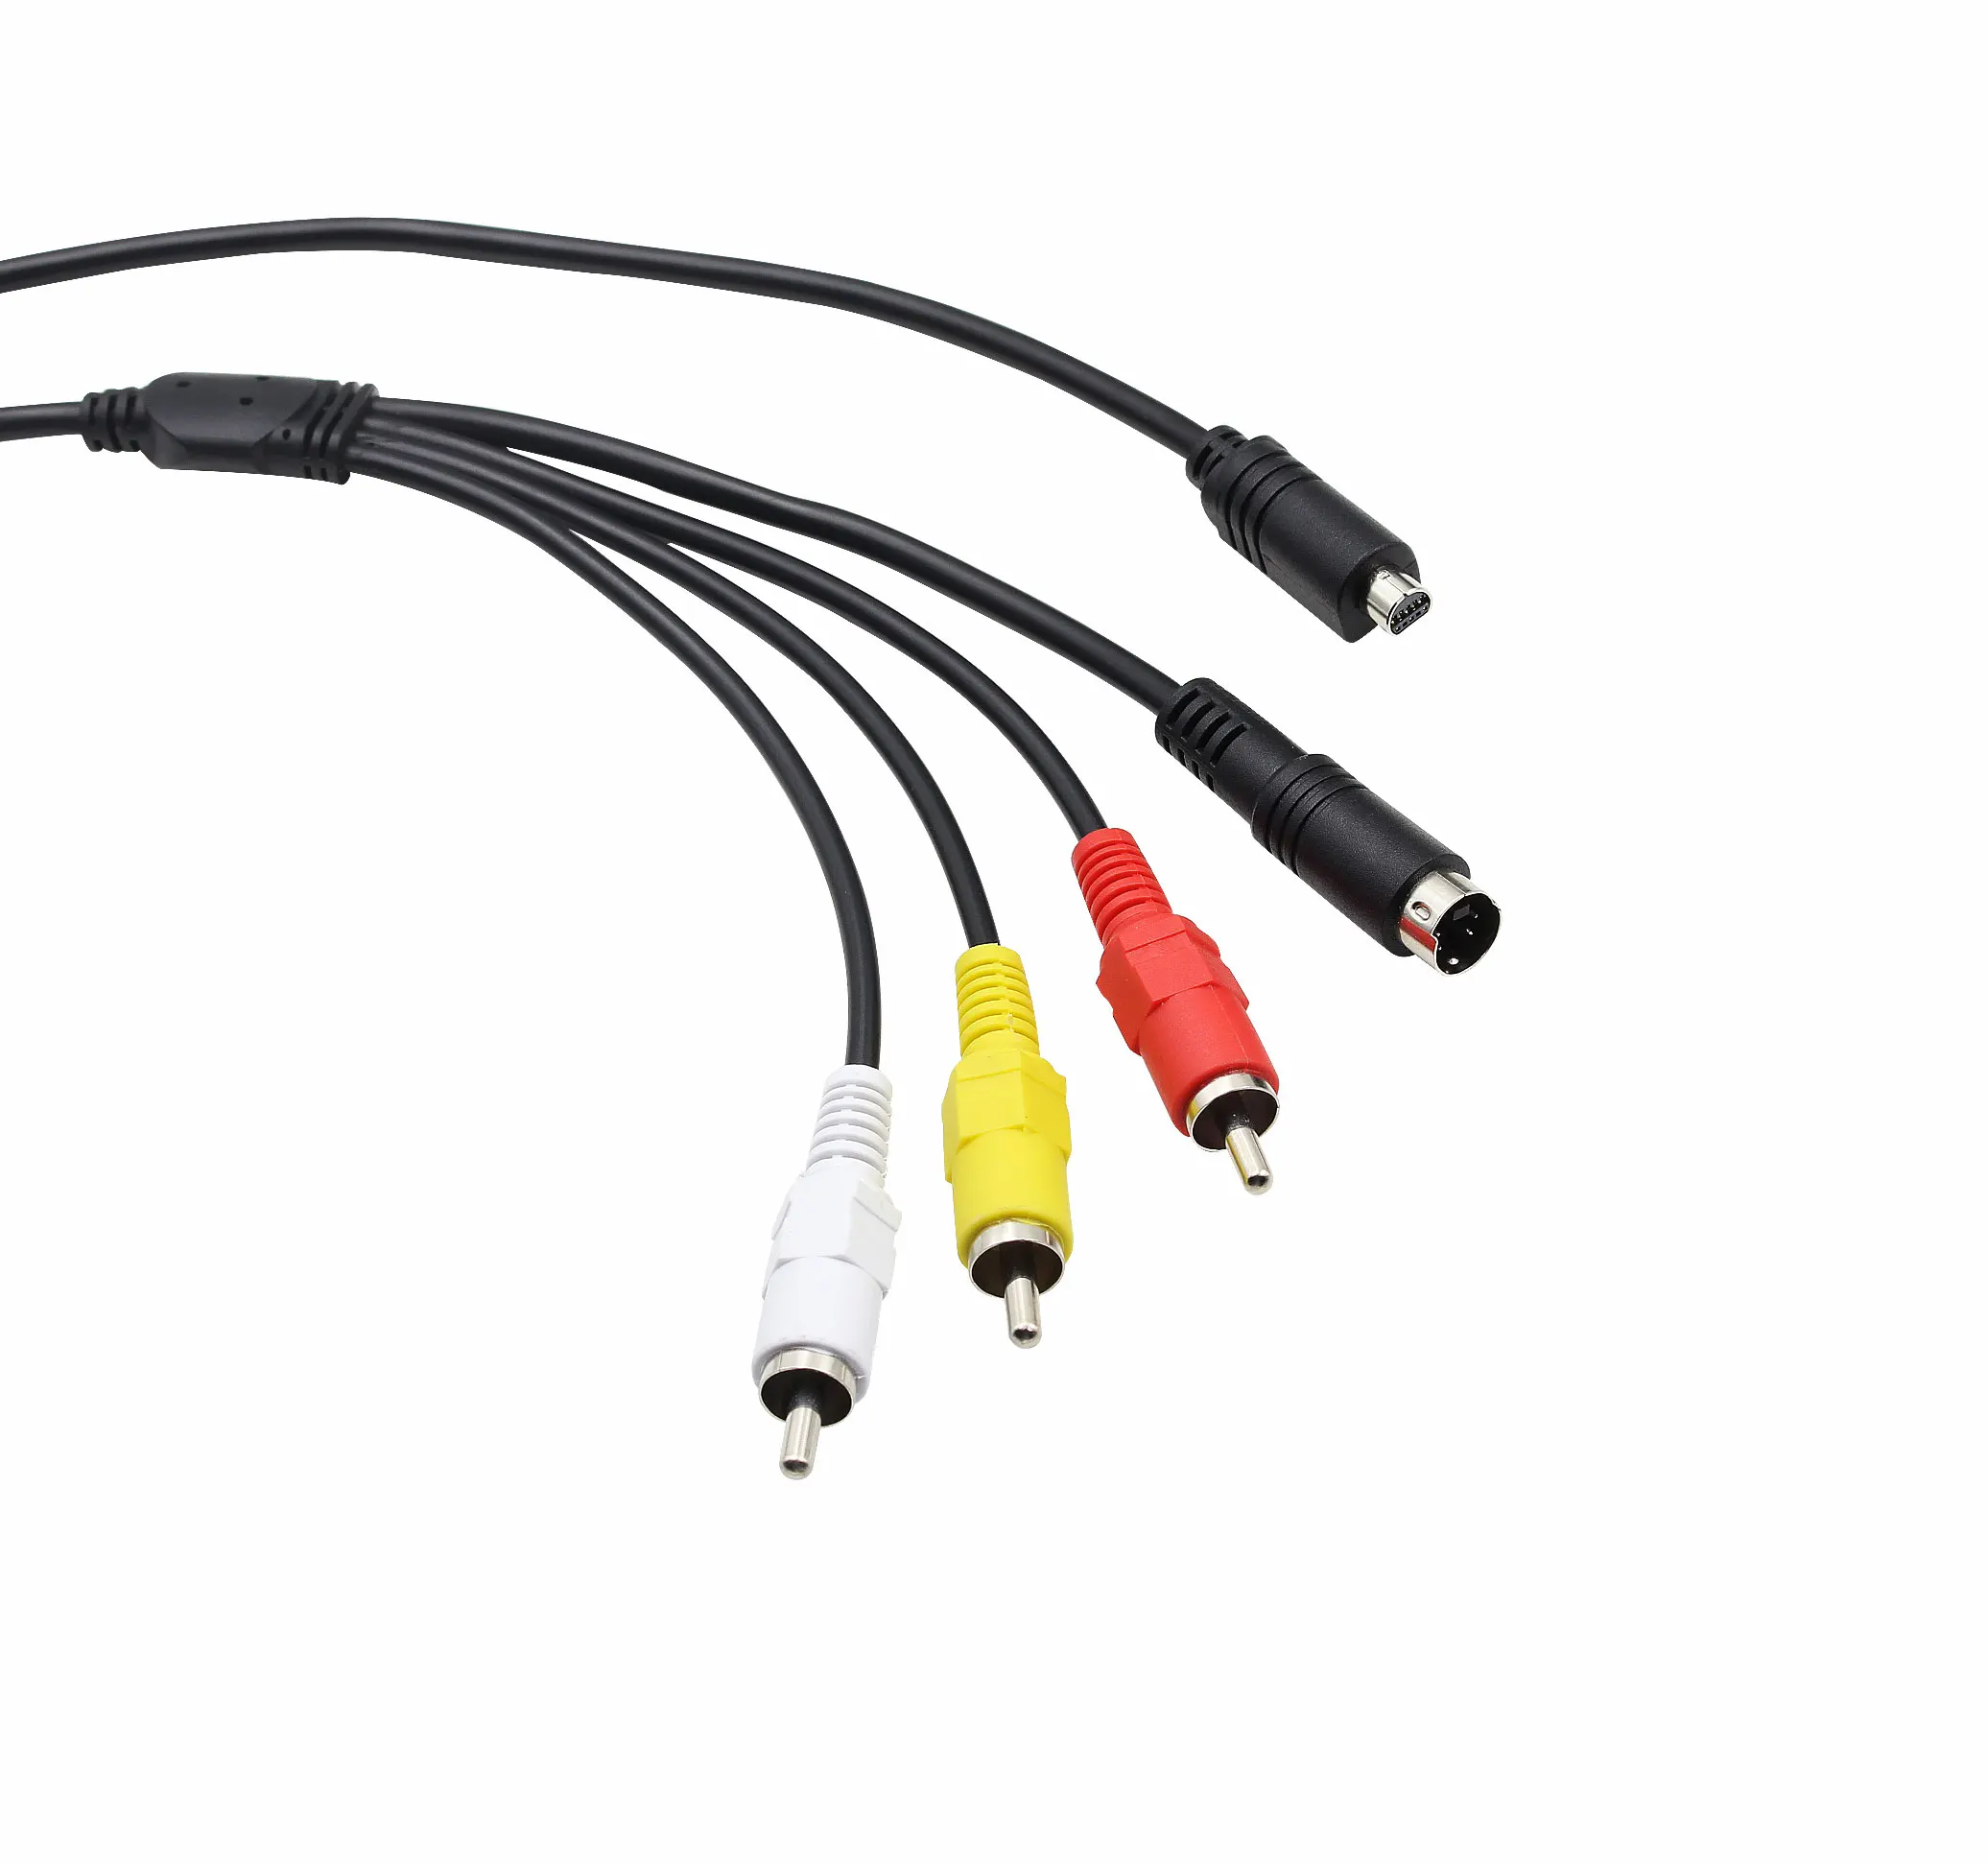 AV A/V TV Video Cable Cord Lead For Sony Camcorder Handycam DCR-PC103 DCR-PC105 